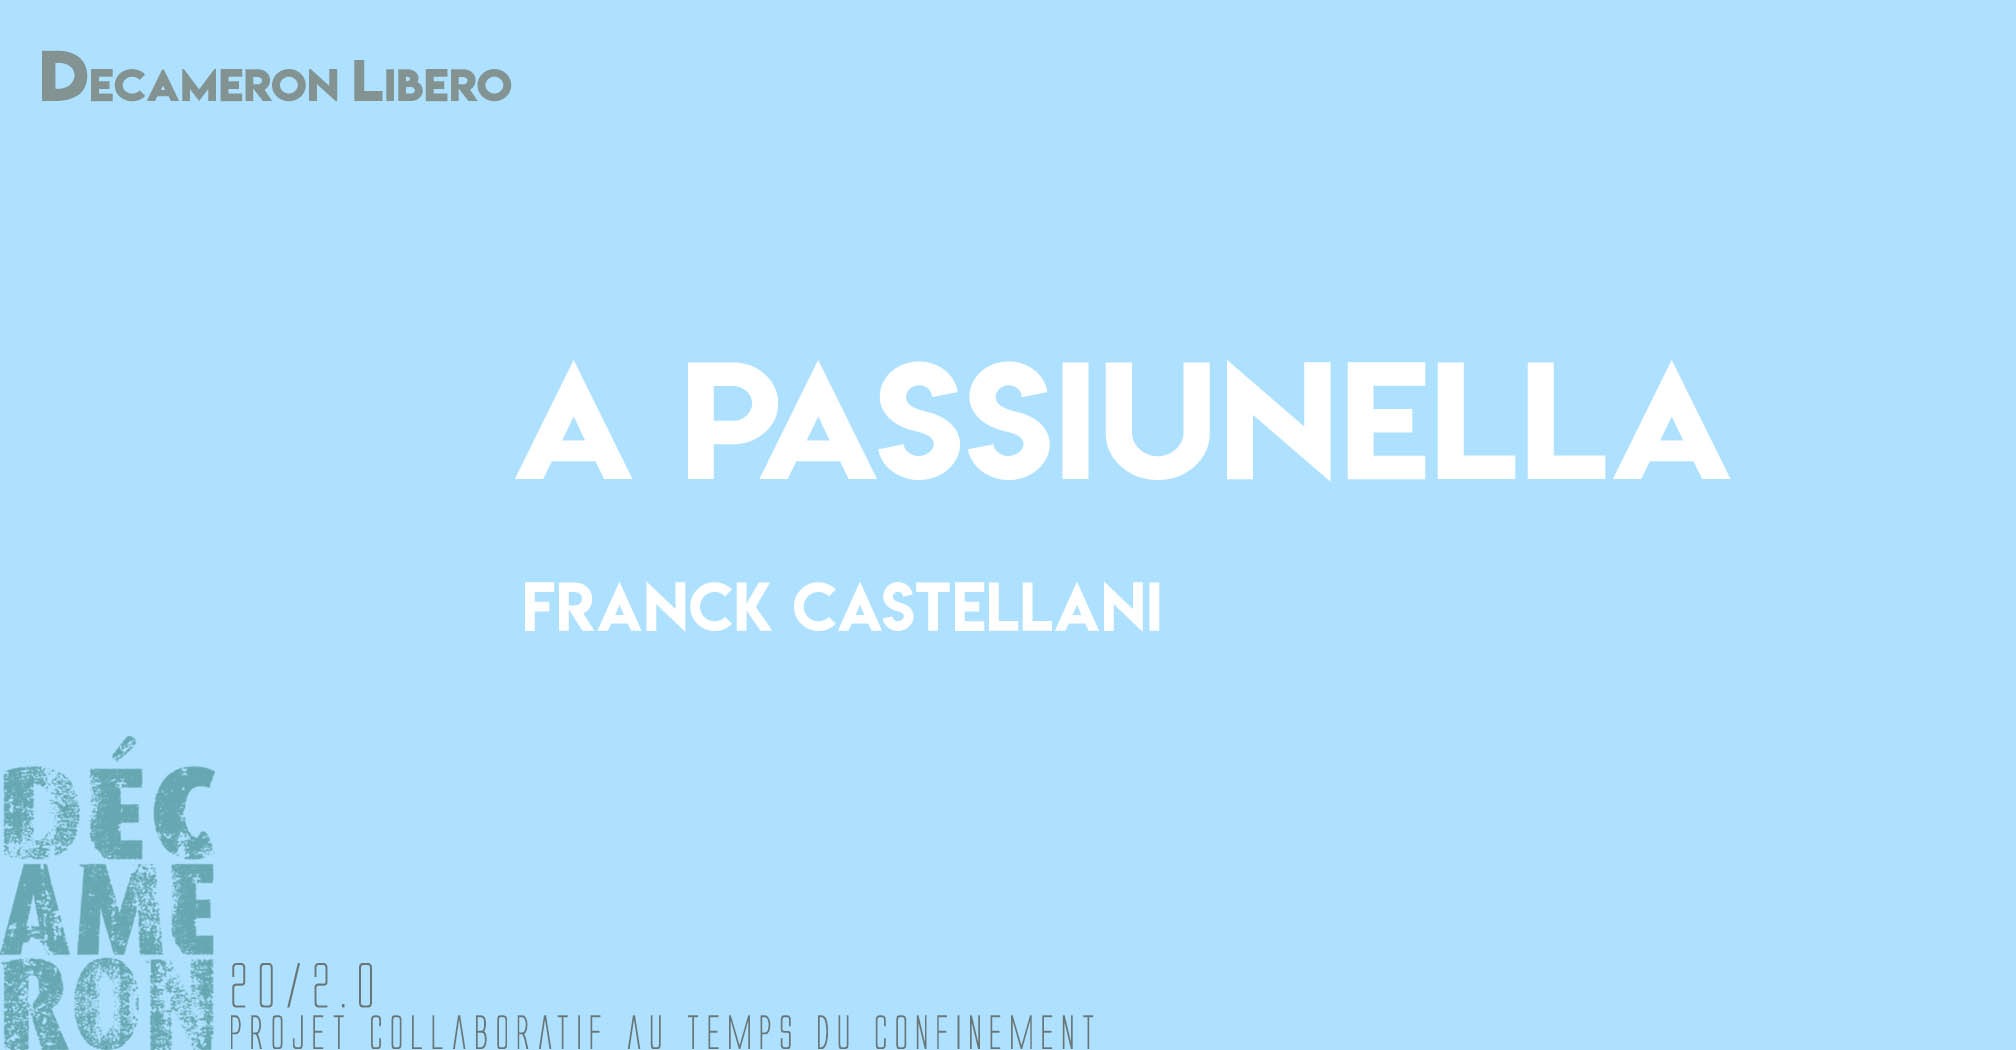 A passiunella - Franck Castellani